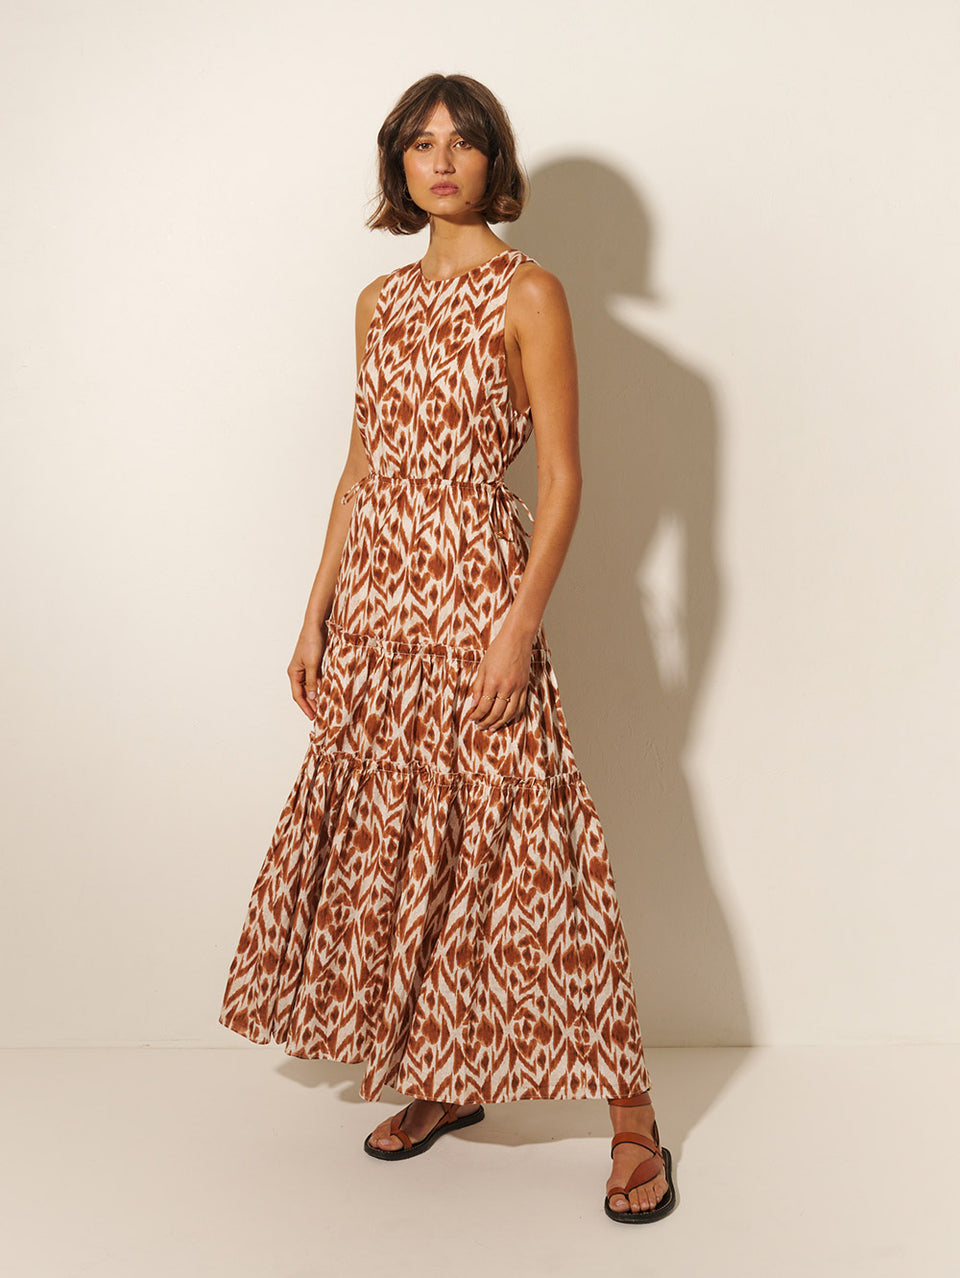 Marisa Cut Out Maxi Dress KIVARI | Model wears brown and ivory aztek printed cut out maxi dress side view